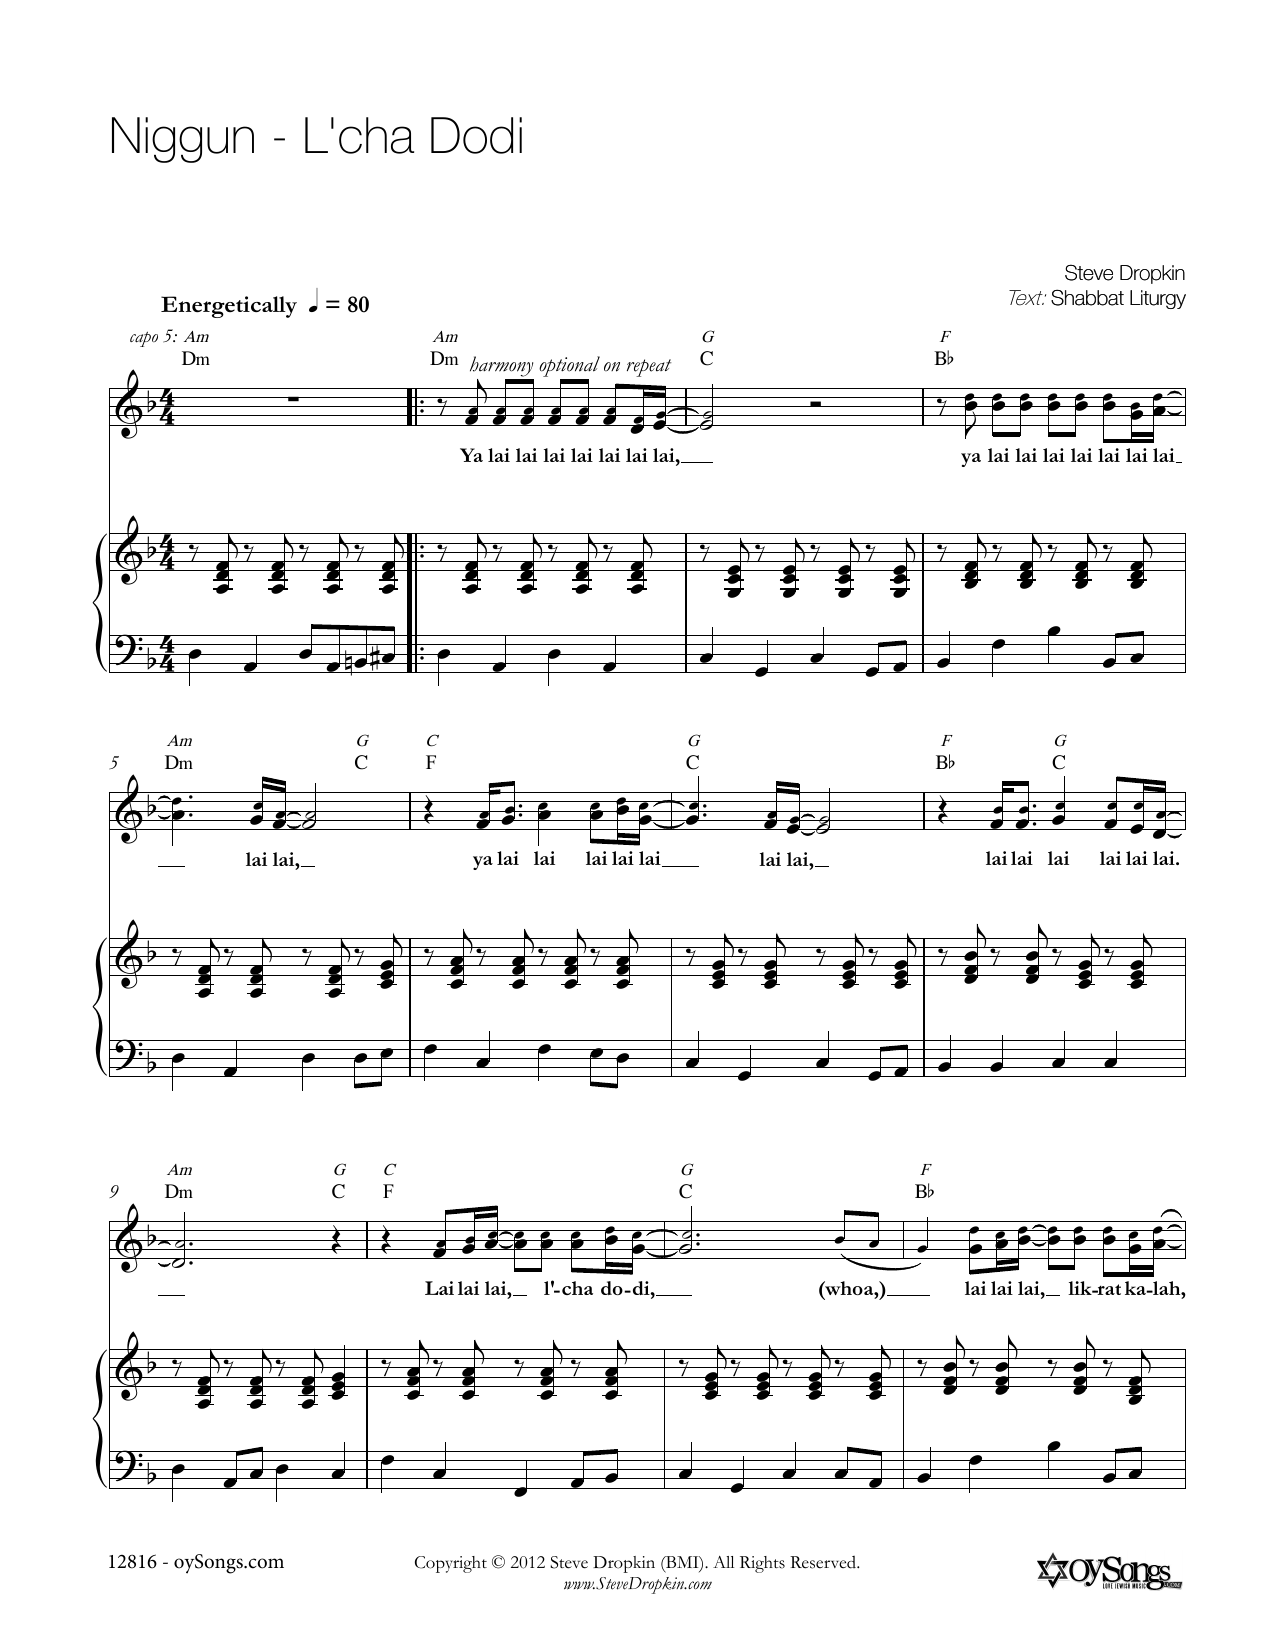 Steve Dropkin Niggun - L'chah Dodi Sheet Music Notes & Chords for Piano, Vocal & Guitar (Right-Hand Melody) - Download or Print PDF